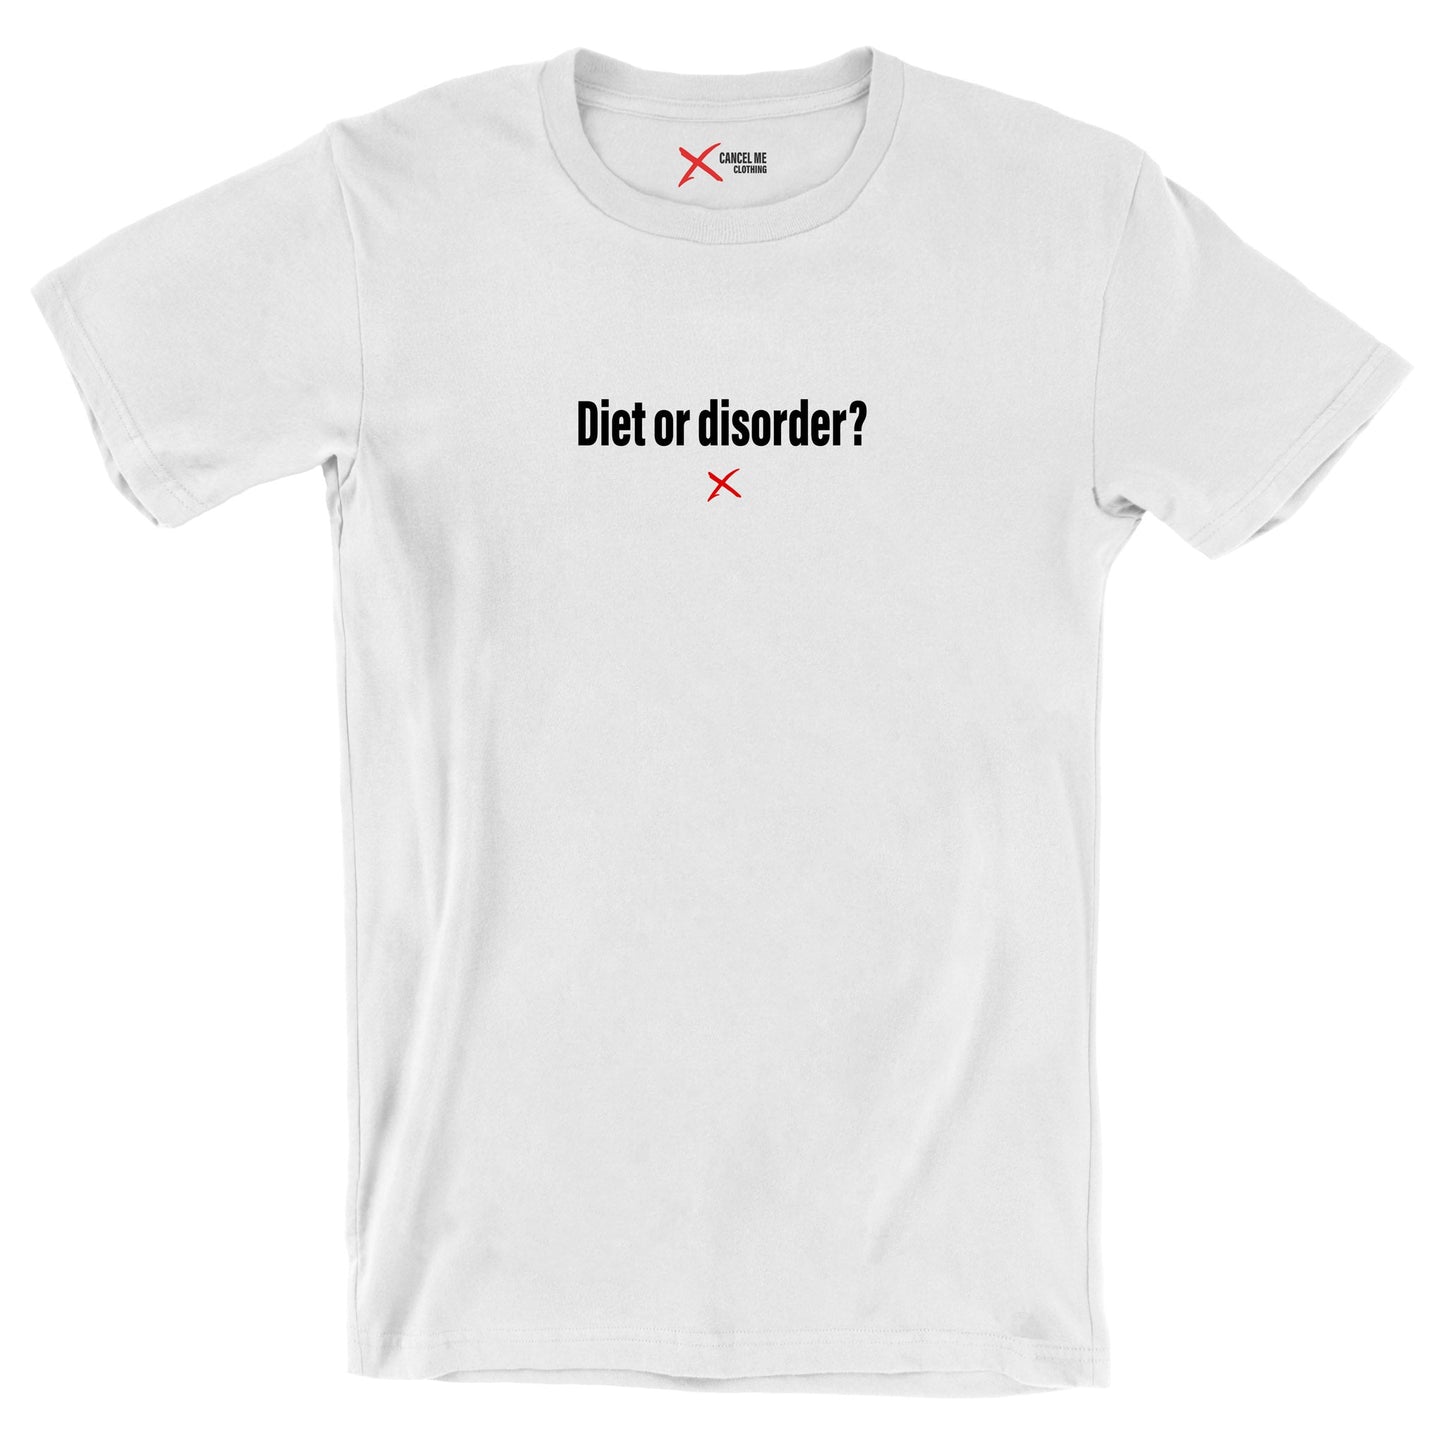 Diet or disorder? - Shirt